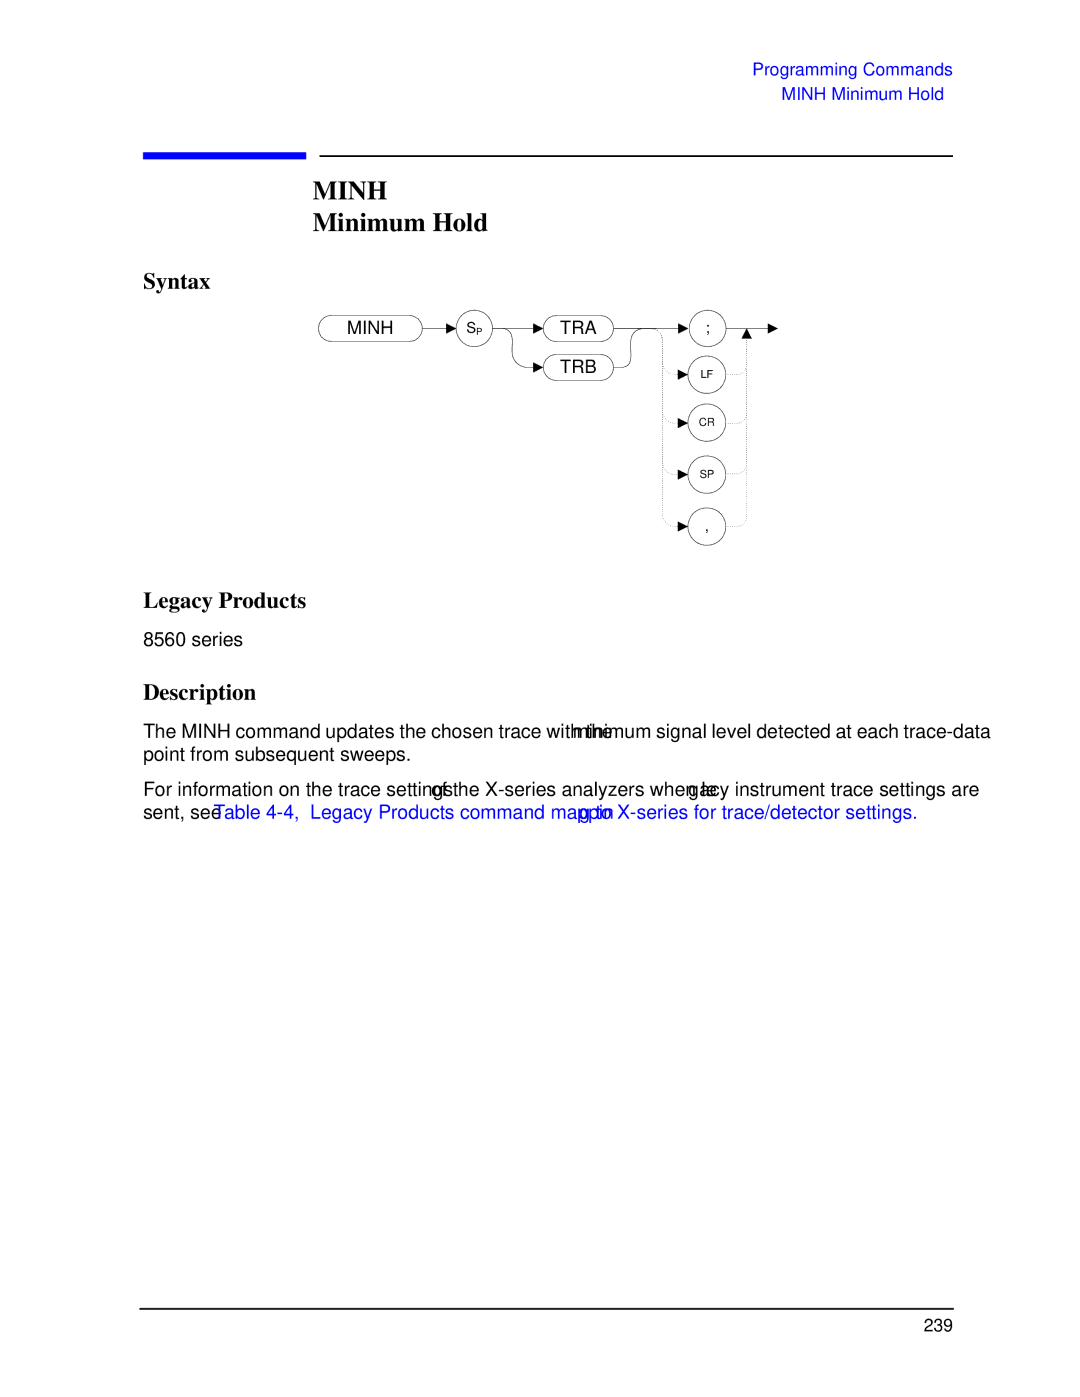 Agilent Technologies N9030a manual Minh, Minimum Hold 